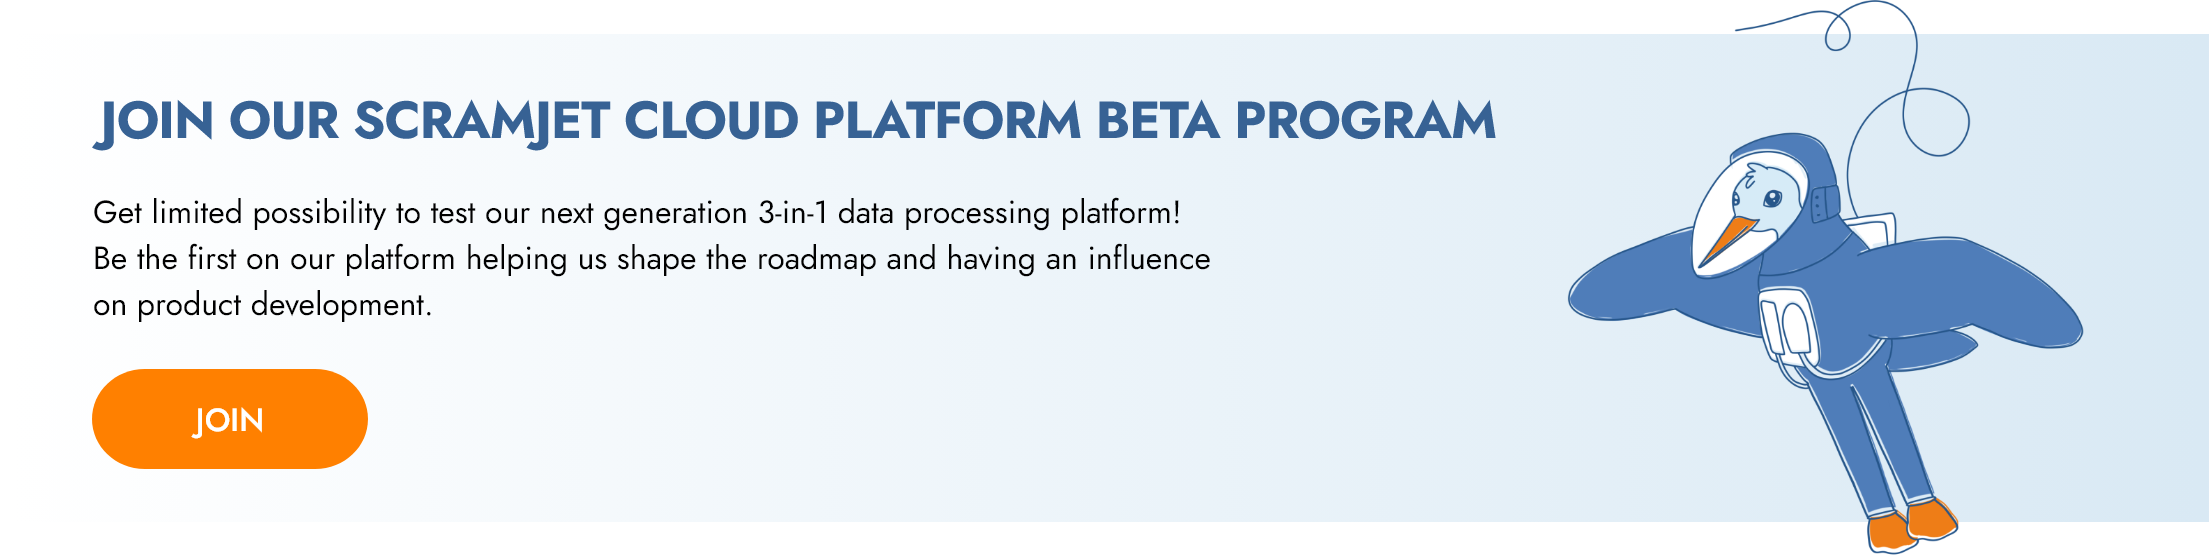 Beta program